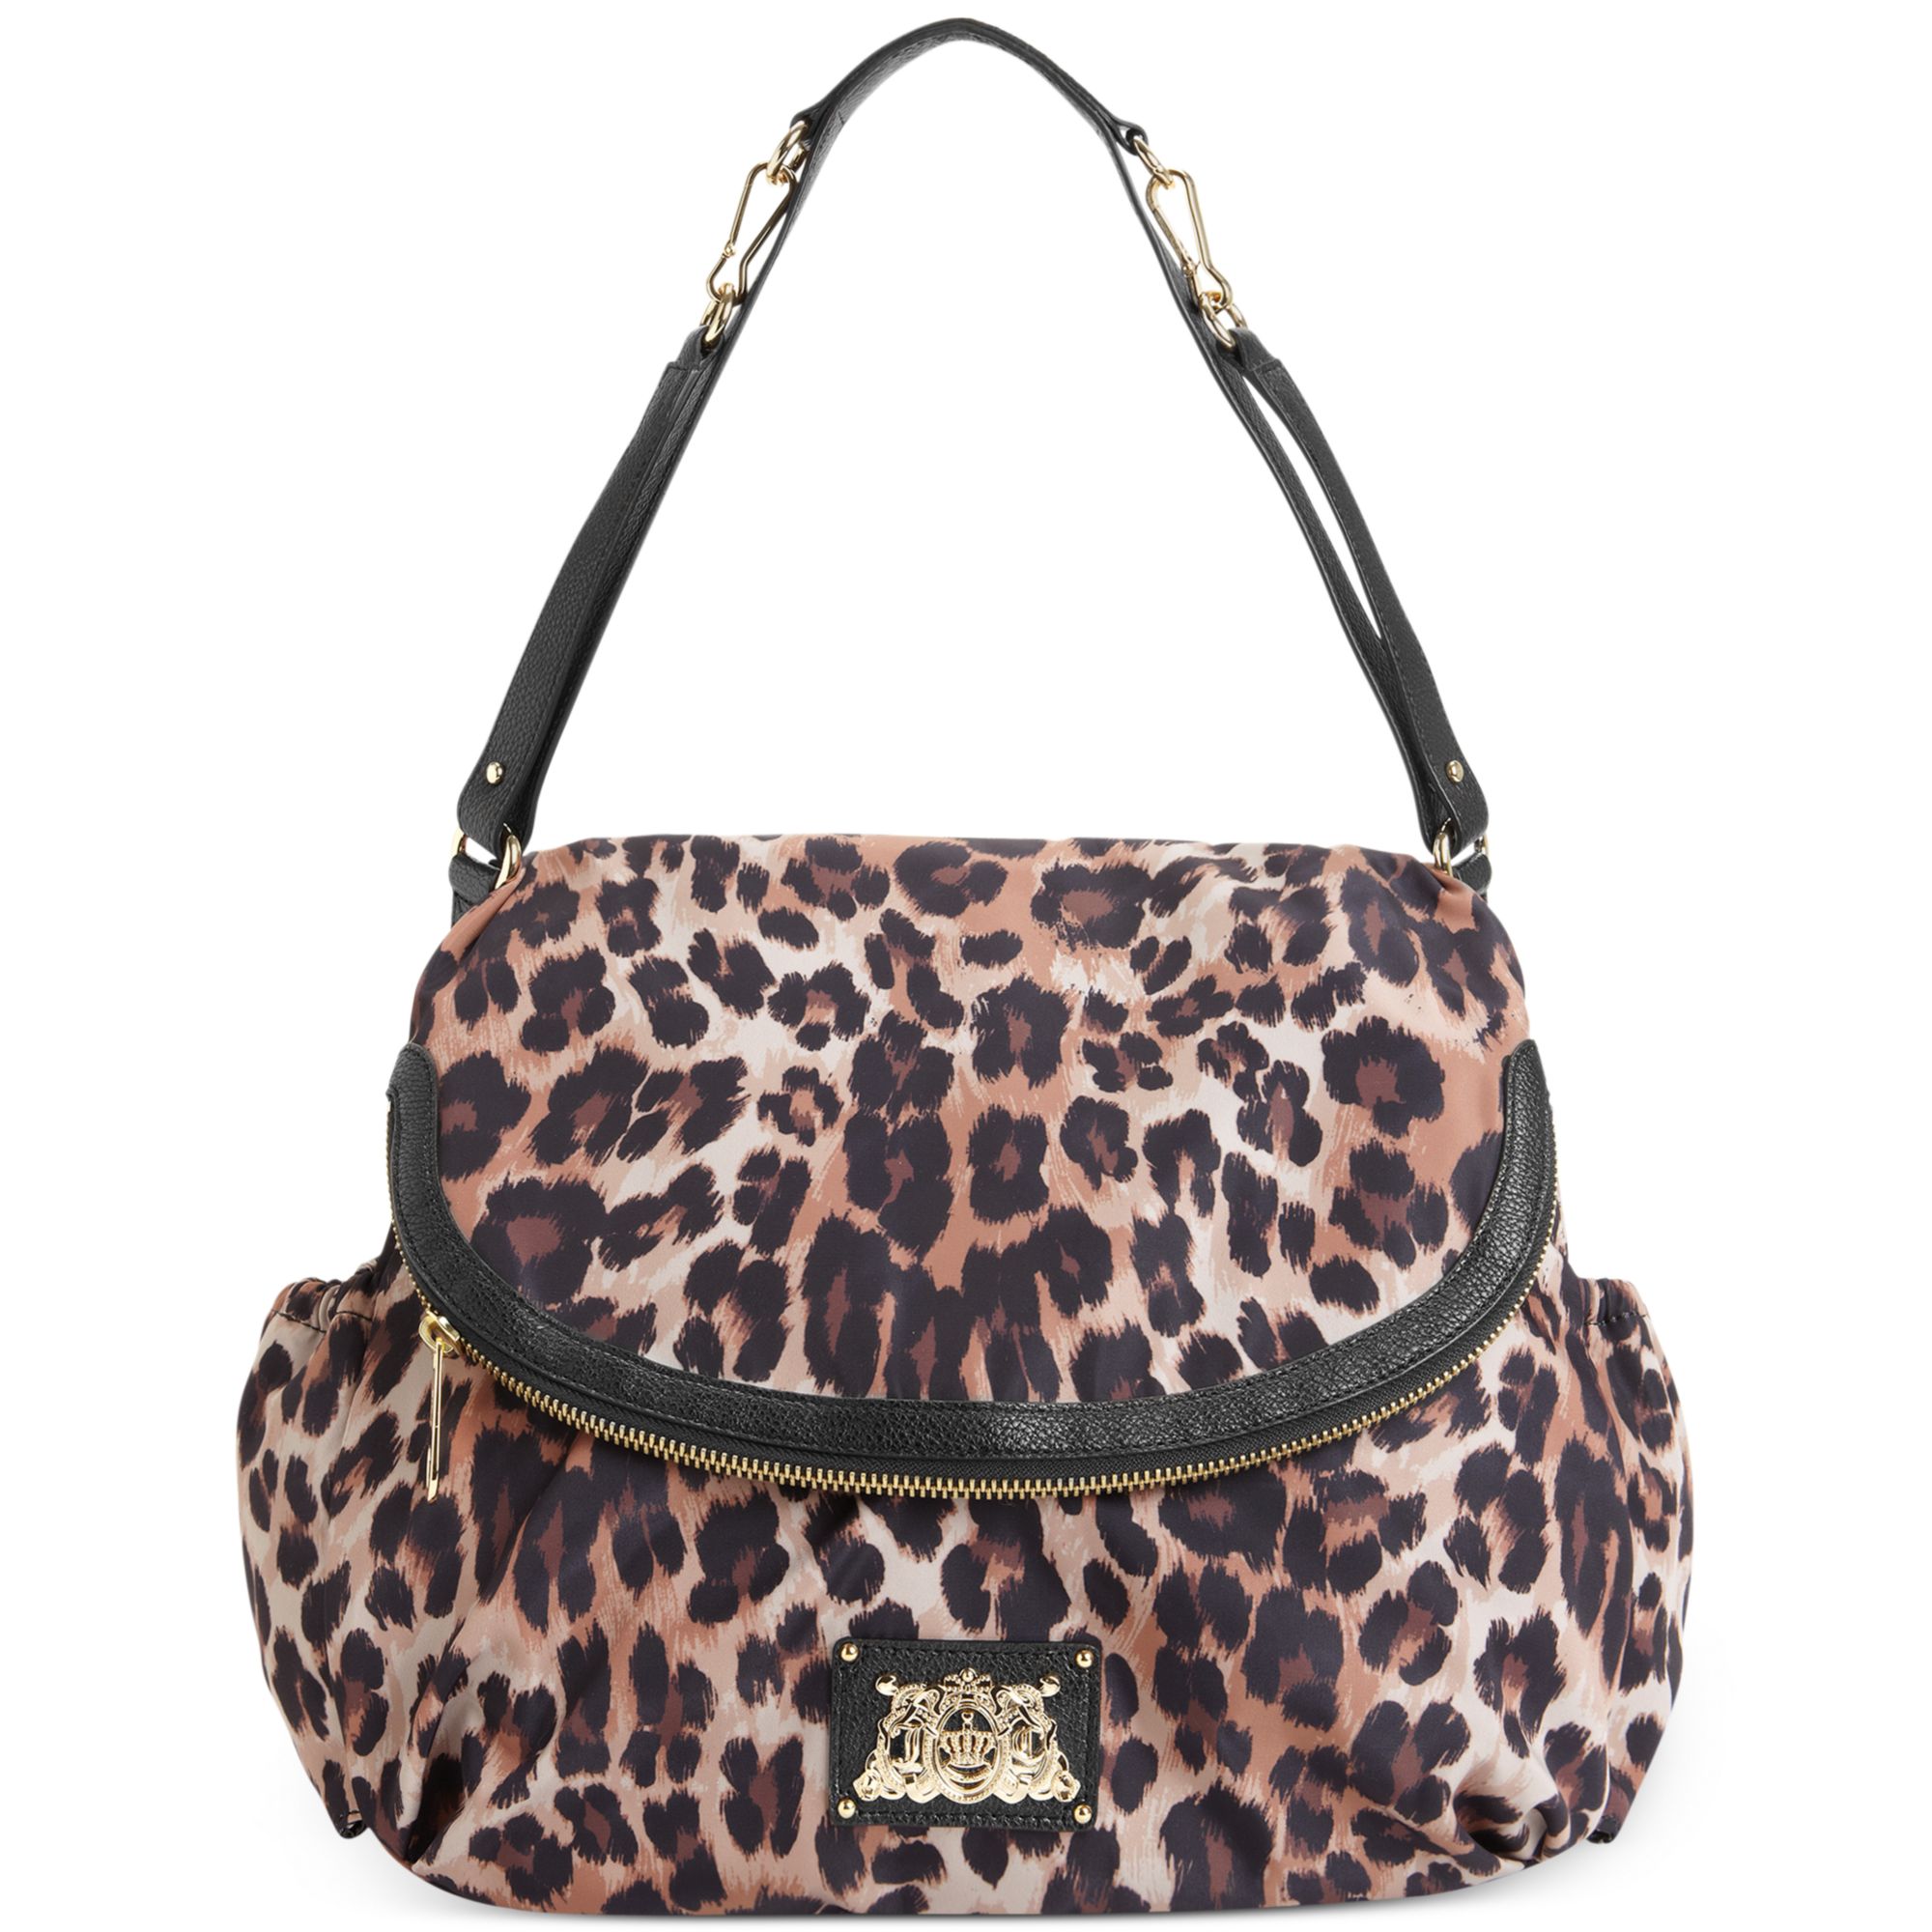 Juicy Couture Malibu Nylon Crossbody Baby Bag in Brown Leopard (Brown) - Lyst